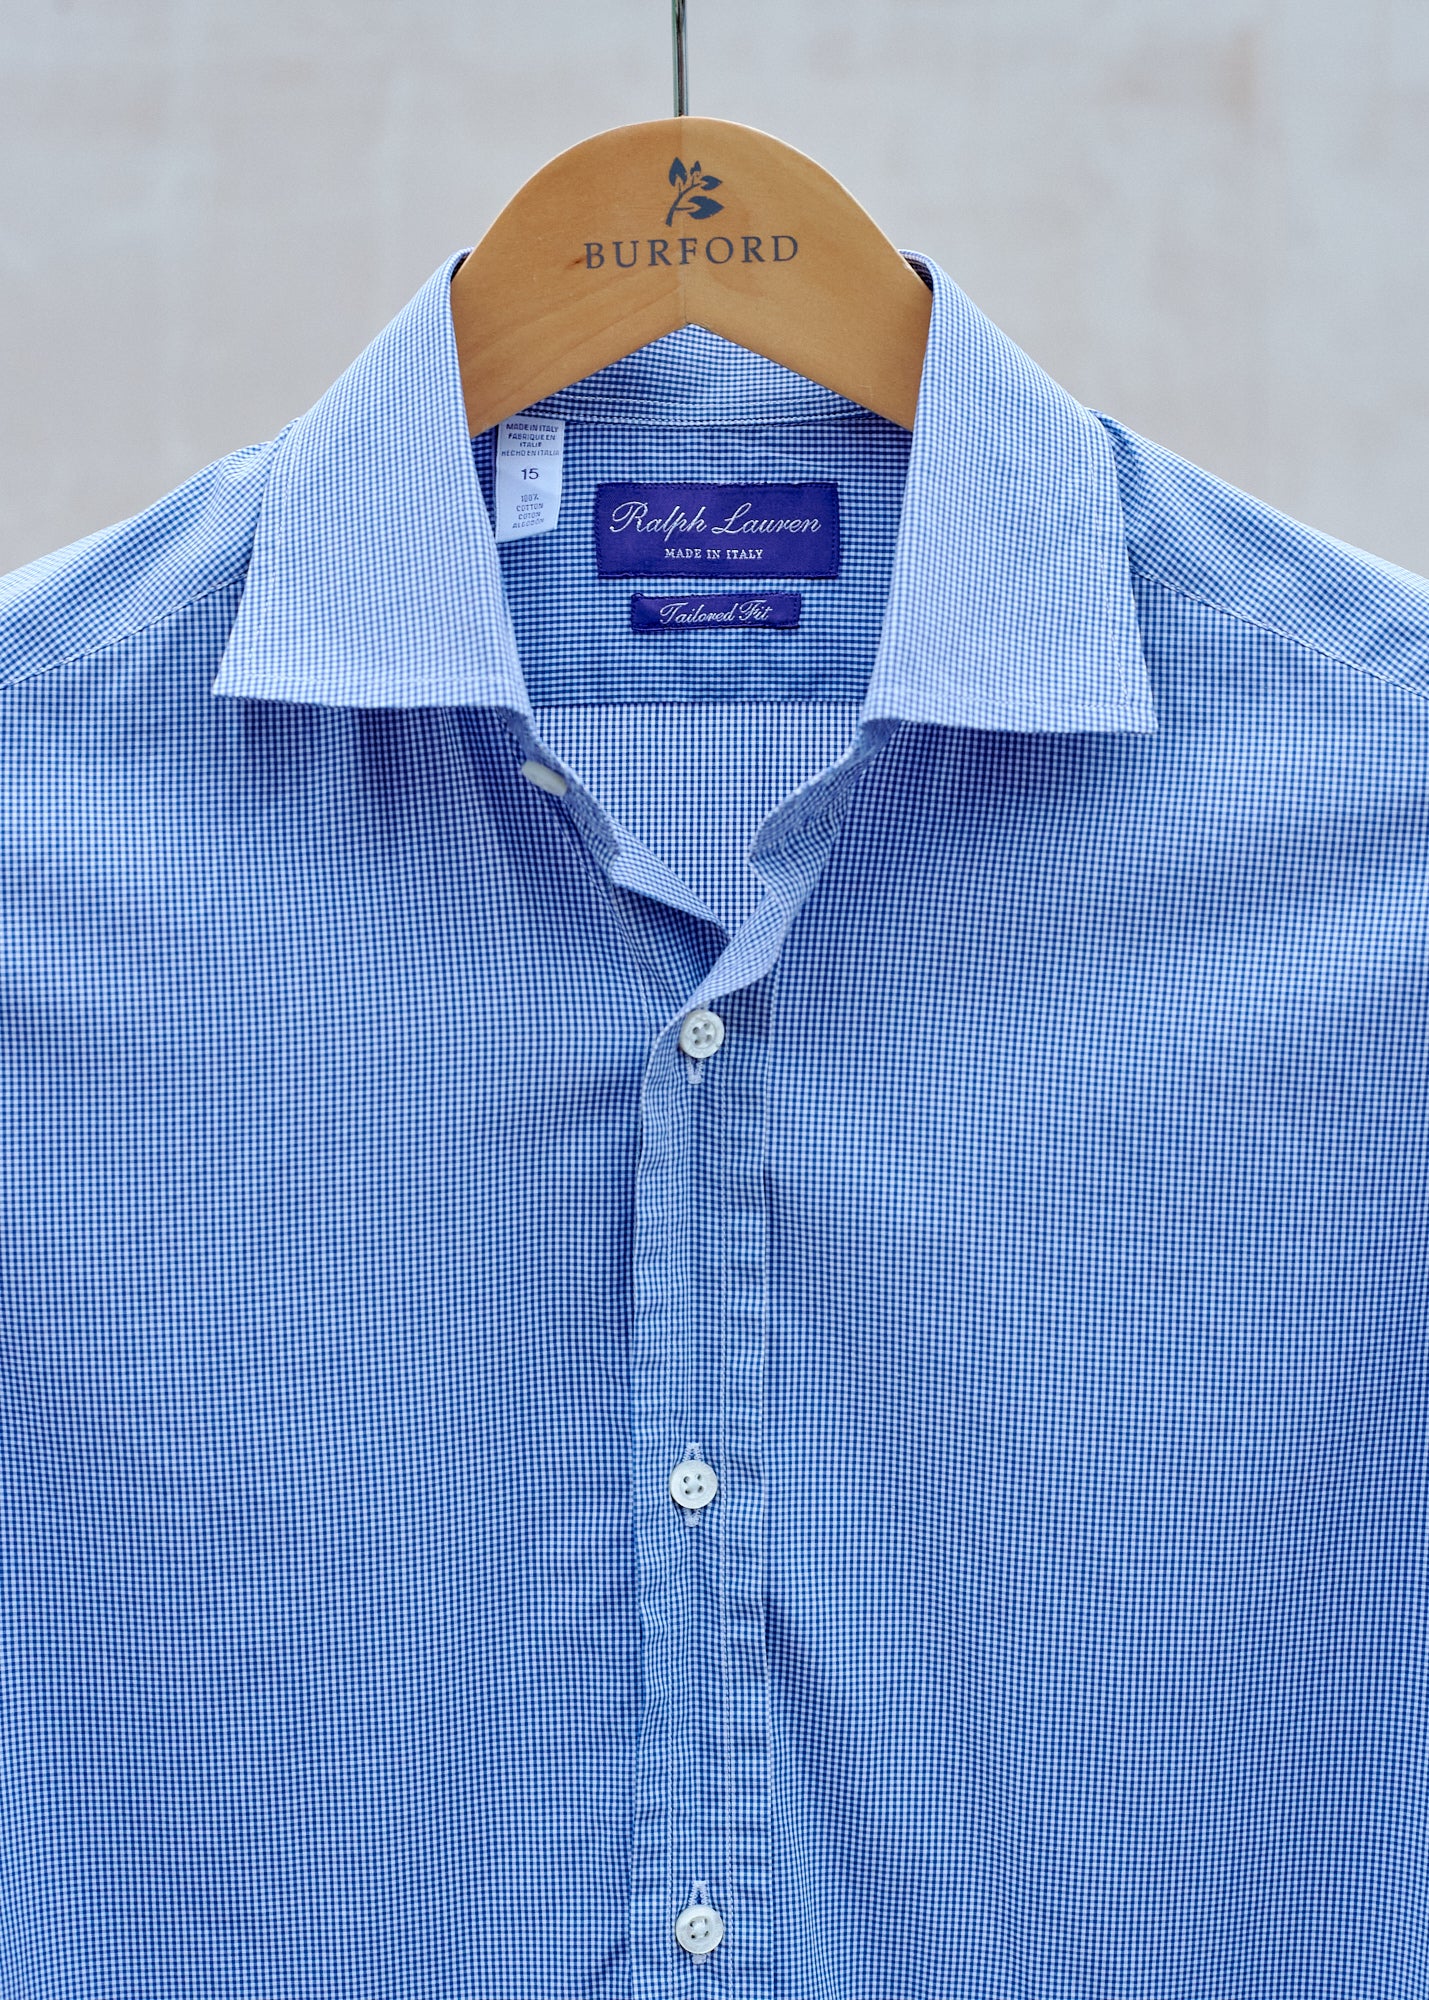 Ralph Lauren PL Blue Gingham 100% Cotton Shirt - S